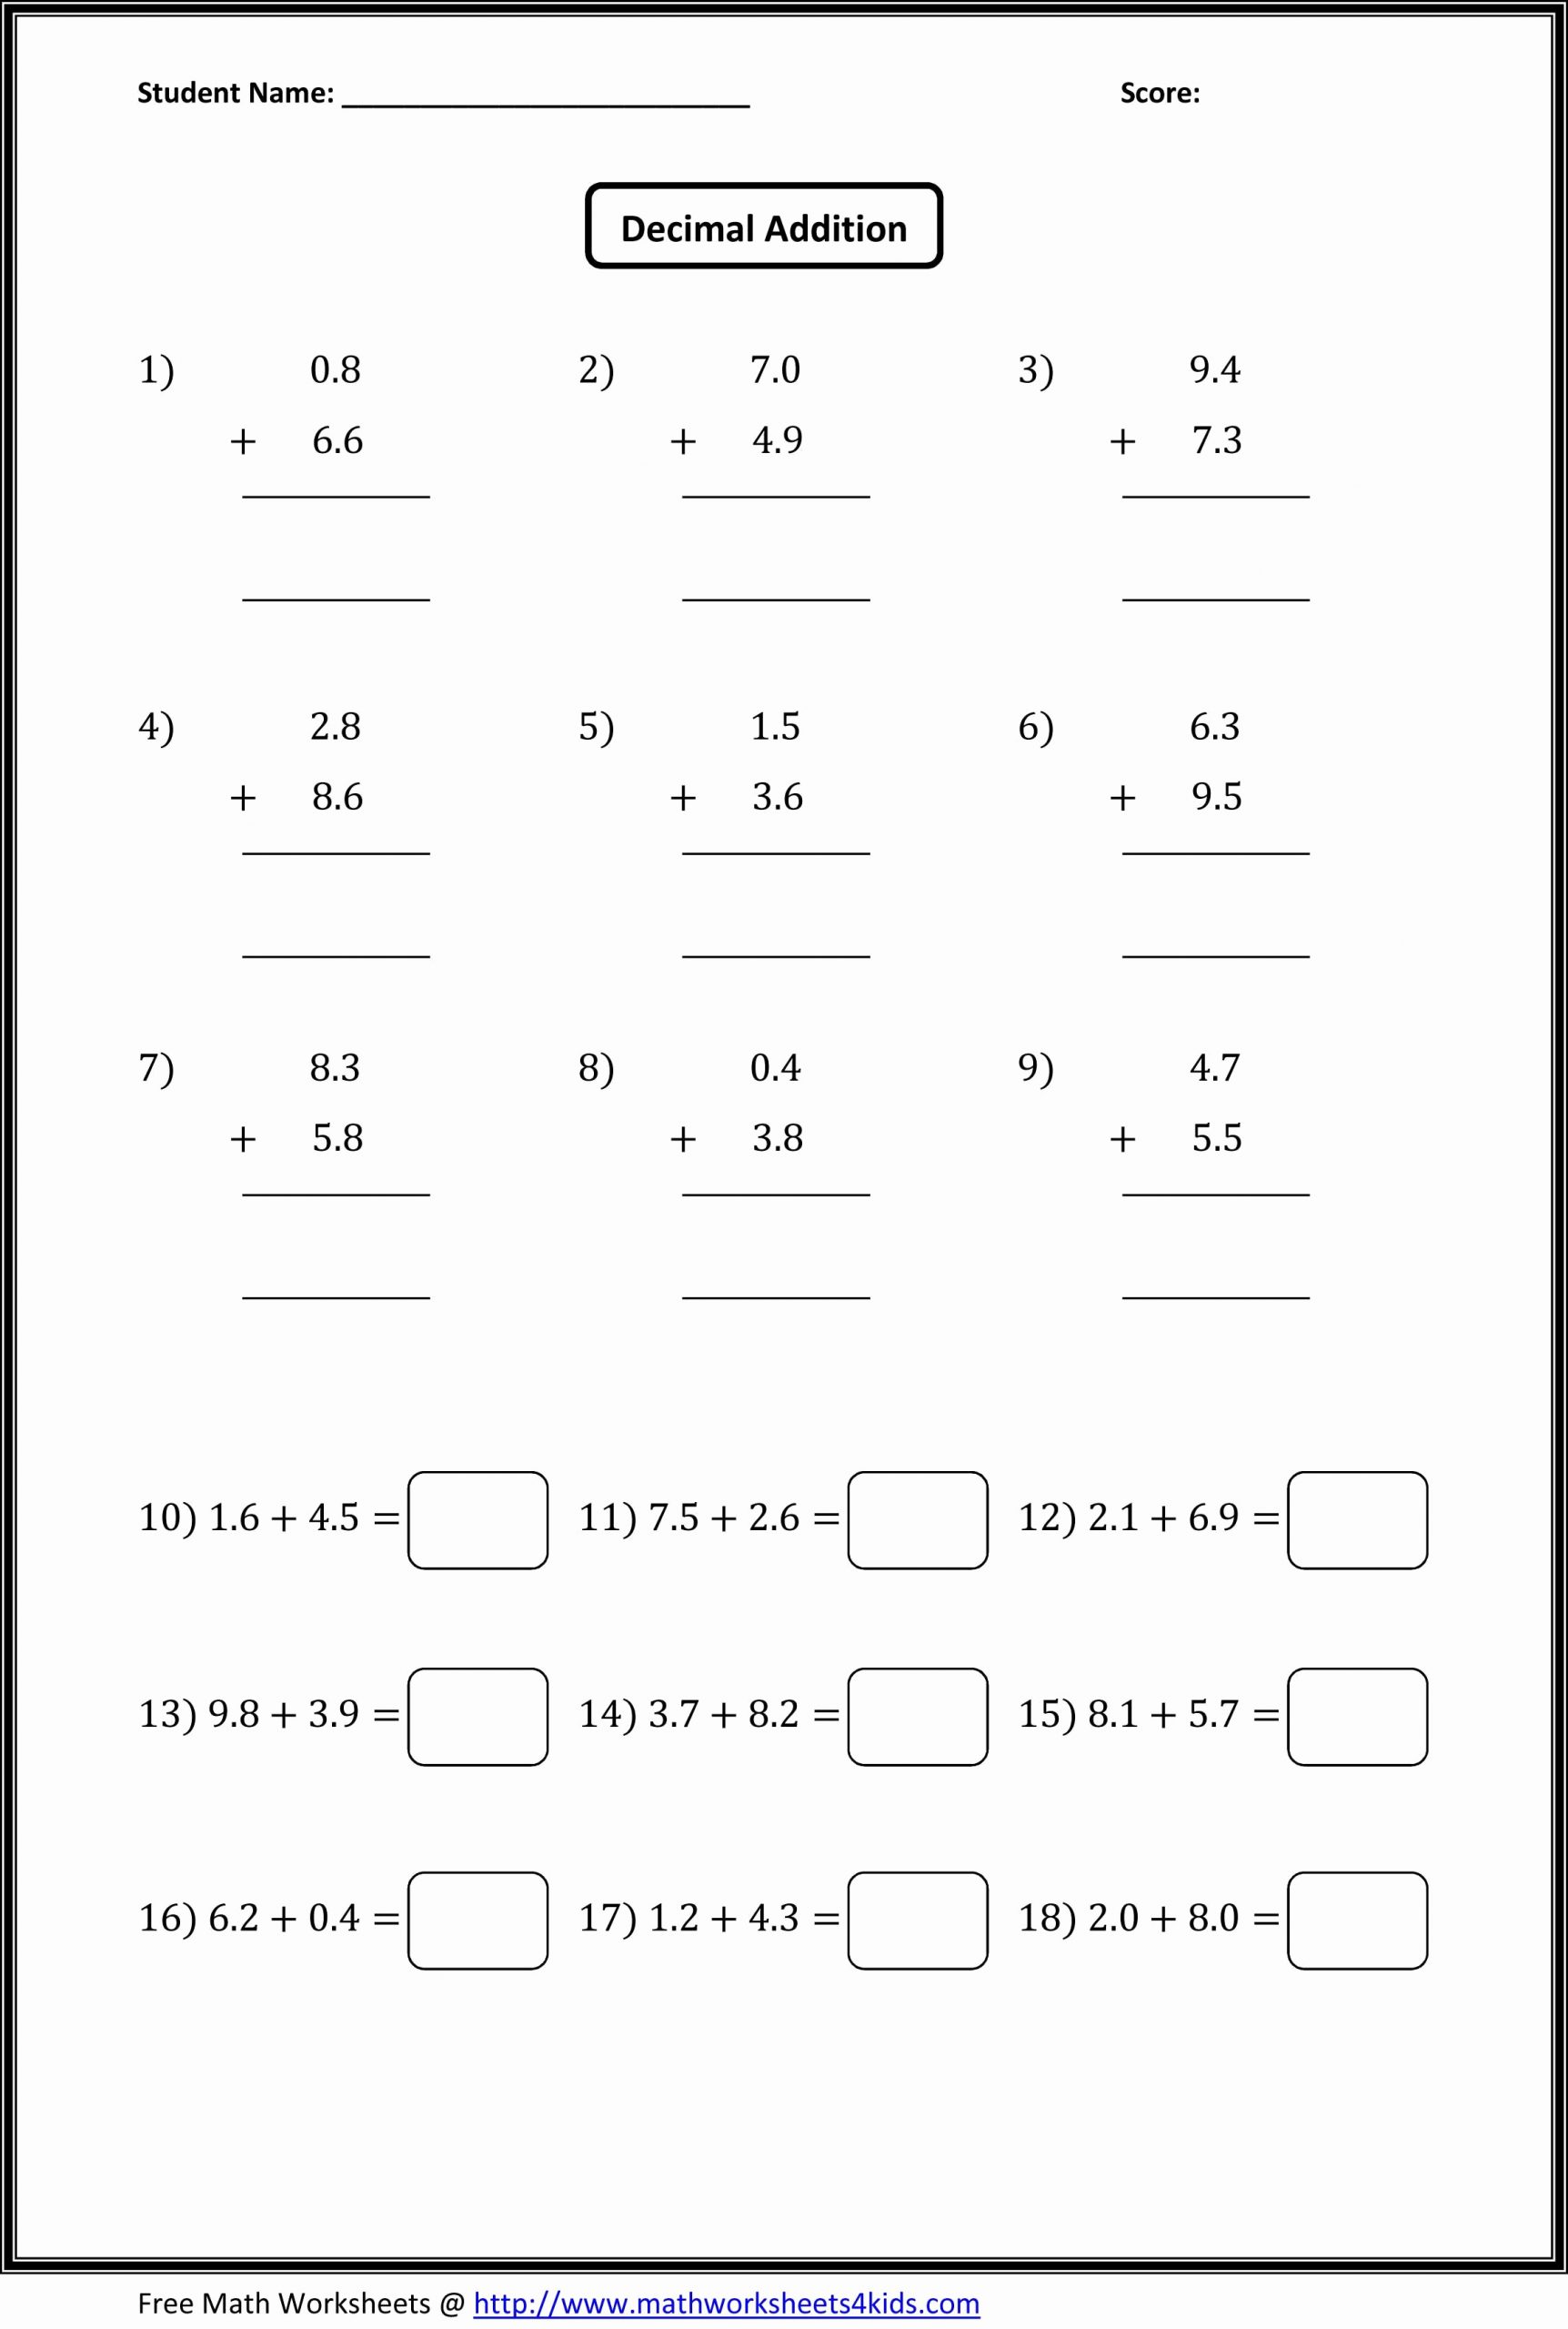 Adding Decimals Horizontal Worksheet Lovely Adding Decimals Worksheet